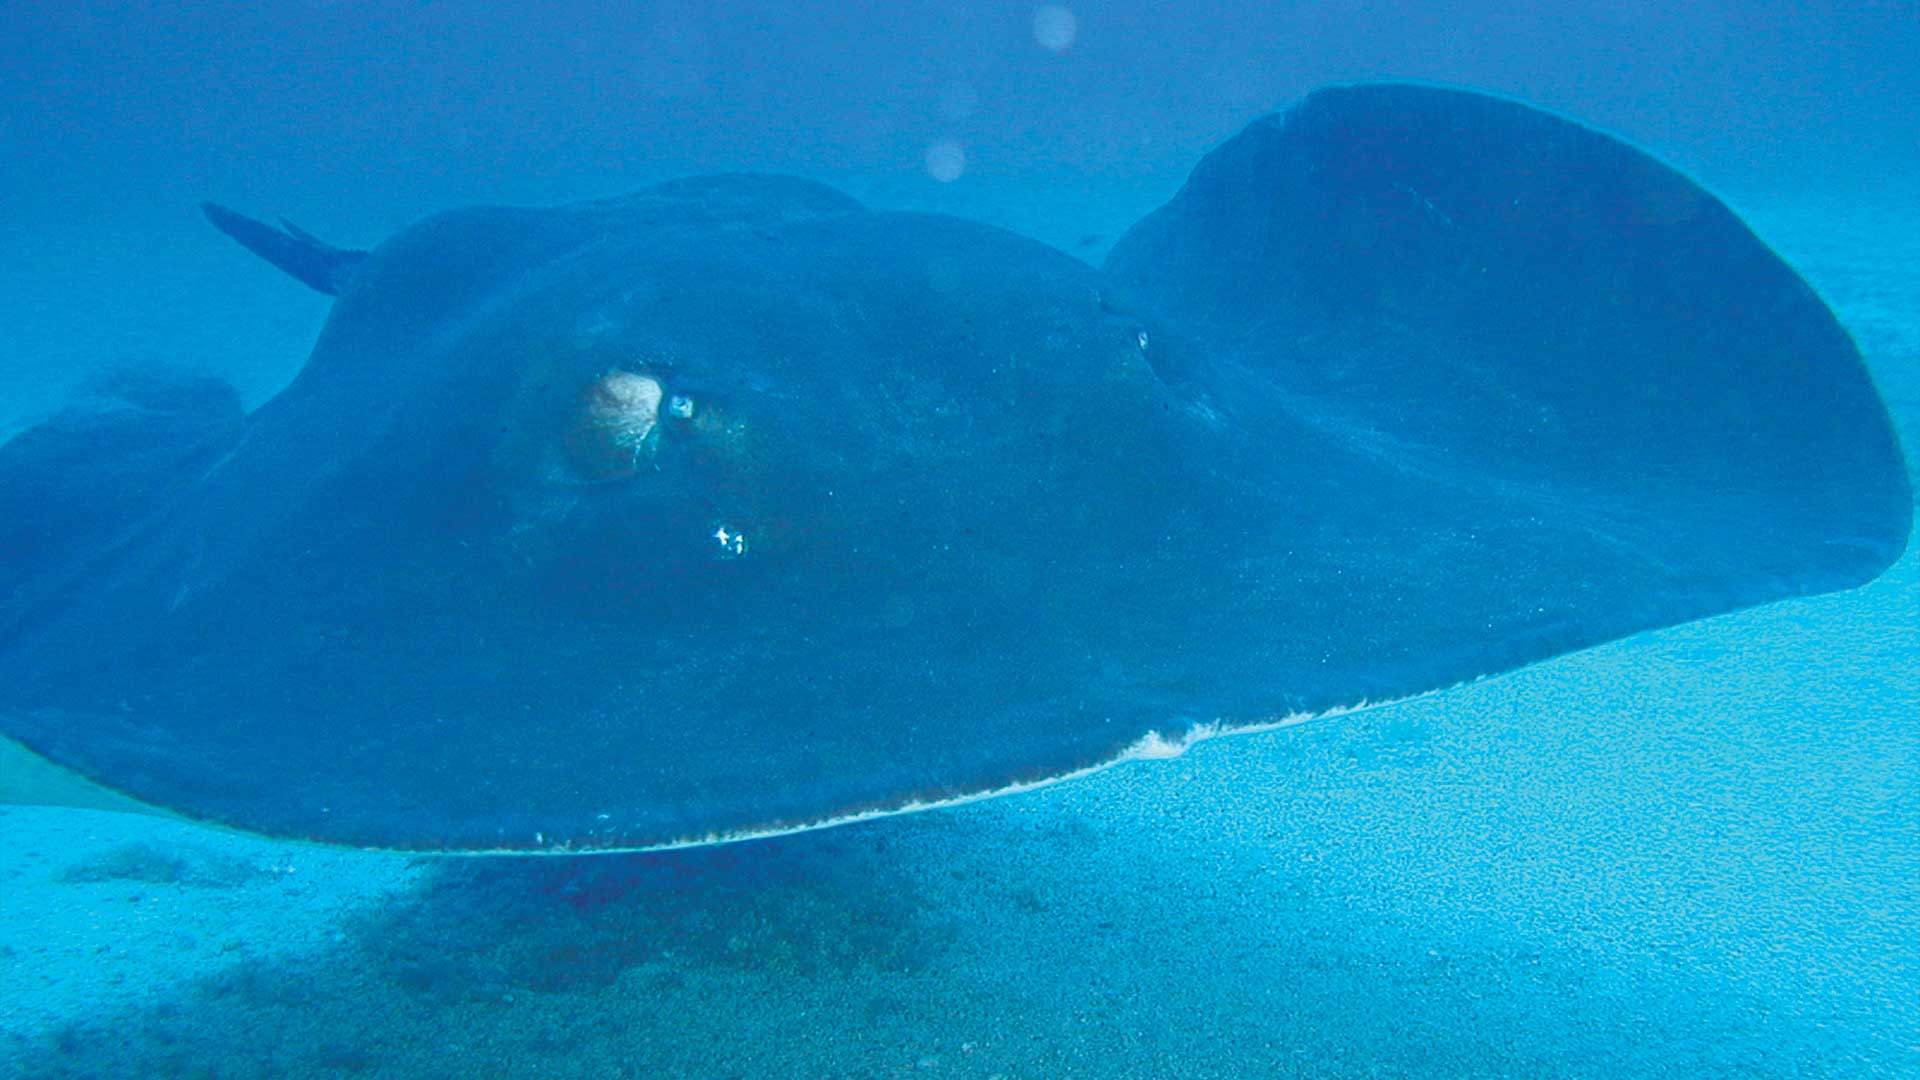 Manta ray swims above the ocean floor in Playa Grande, Costa Rica